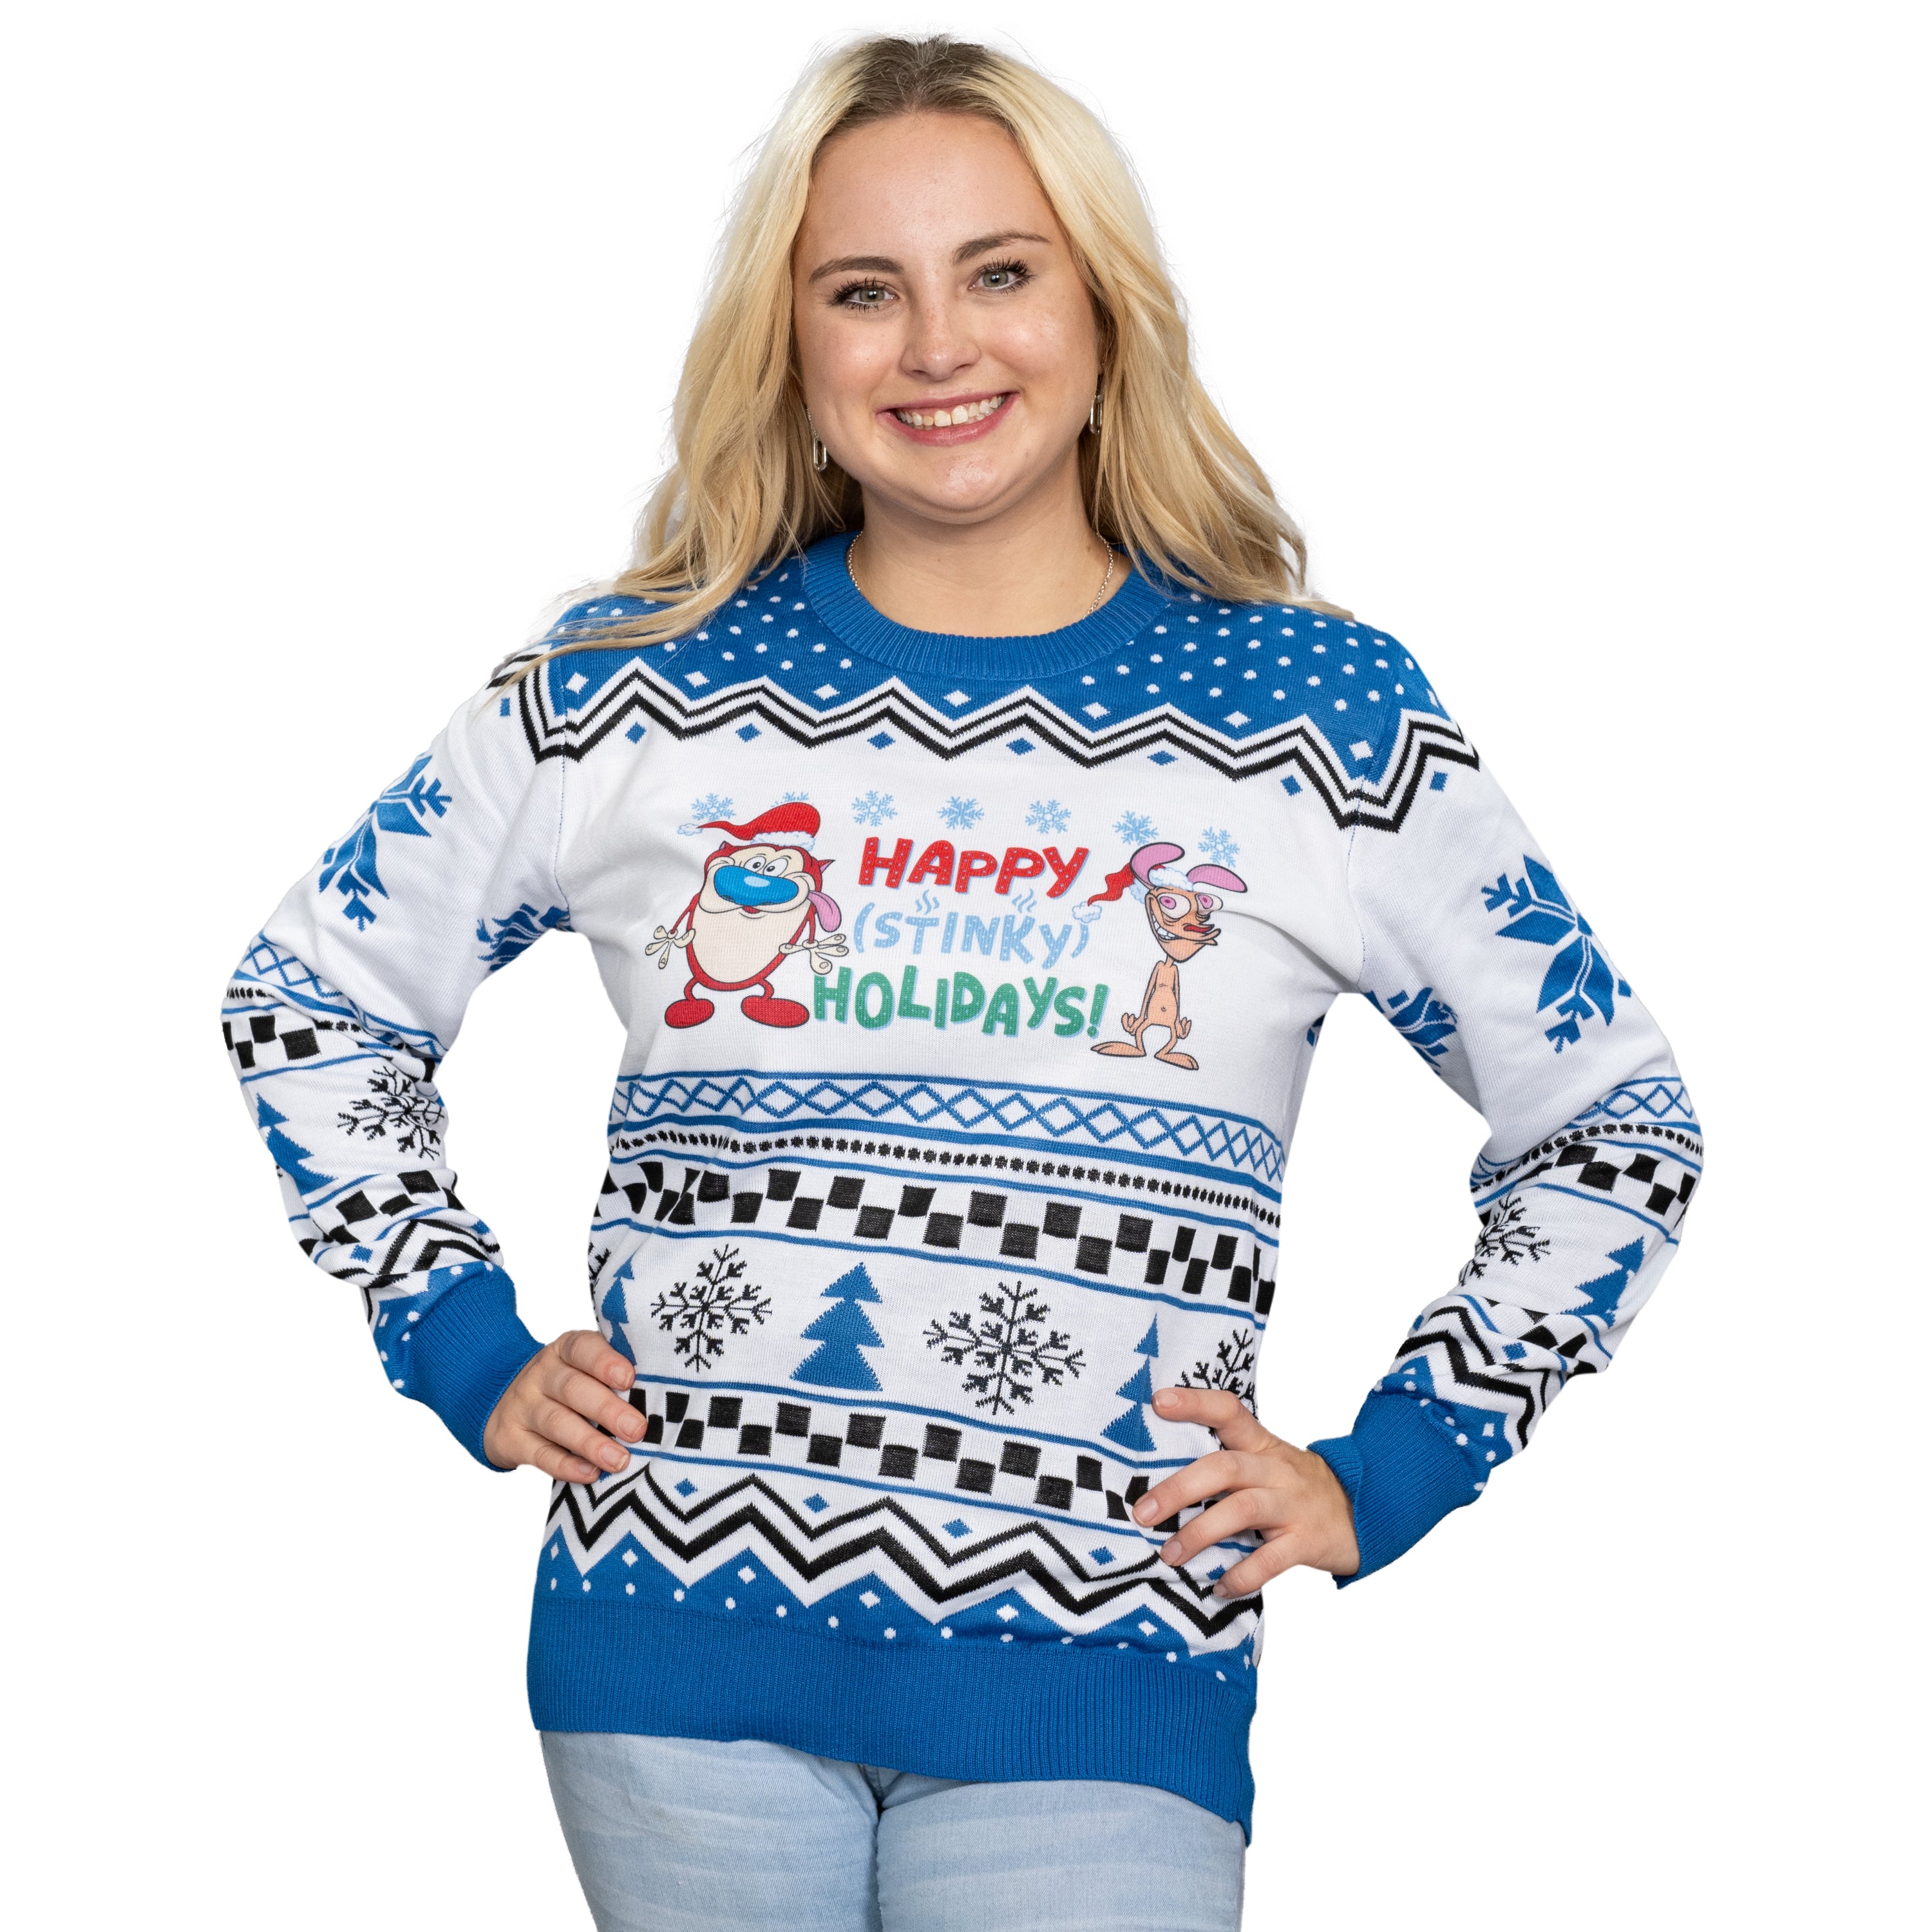 Ren & Stimpy "Happy (Stinky) Holidays" Ugly Christmas Sweater